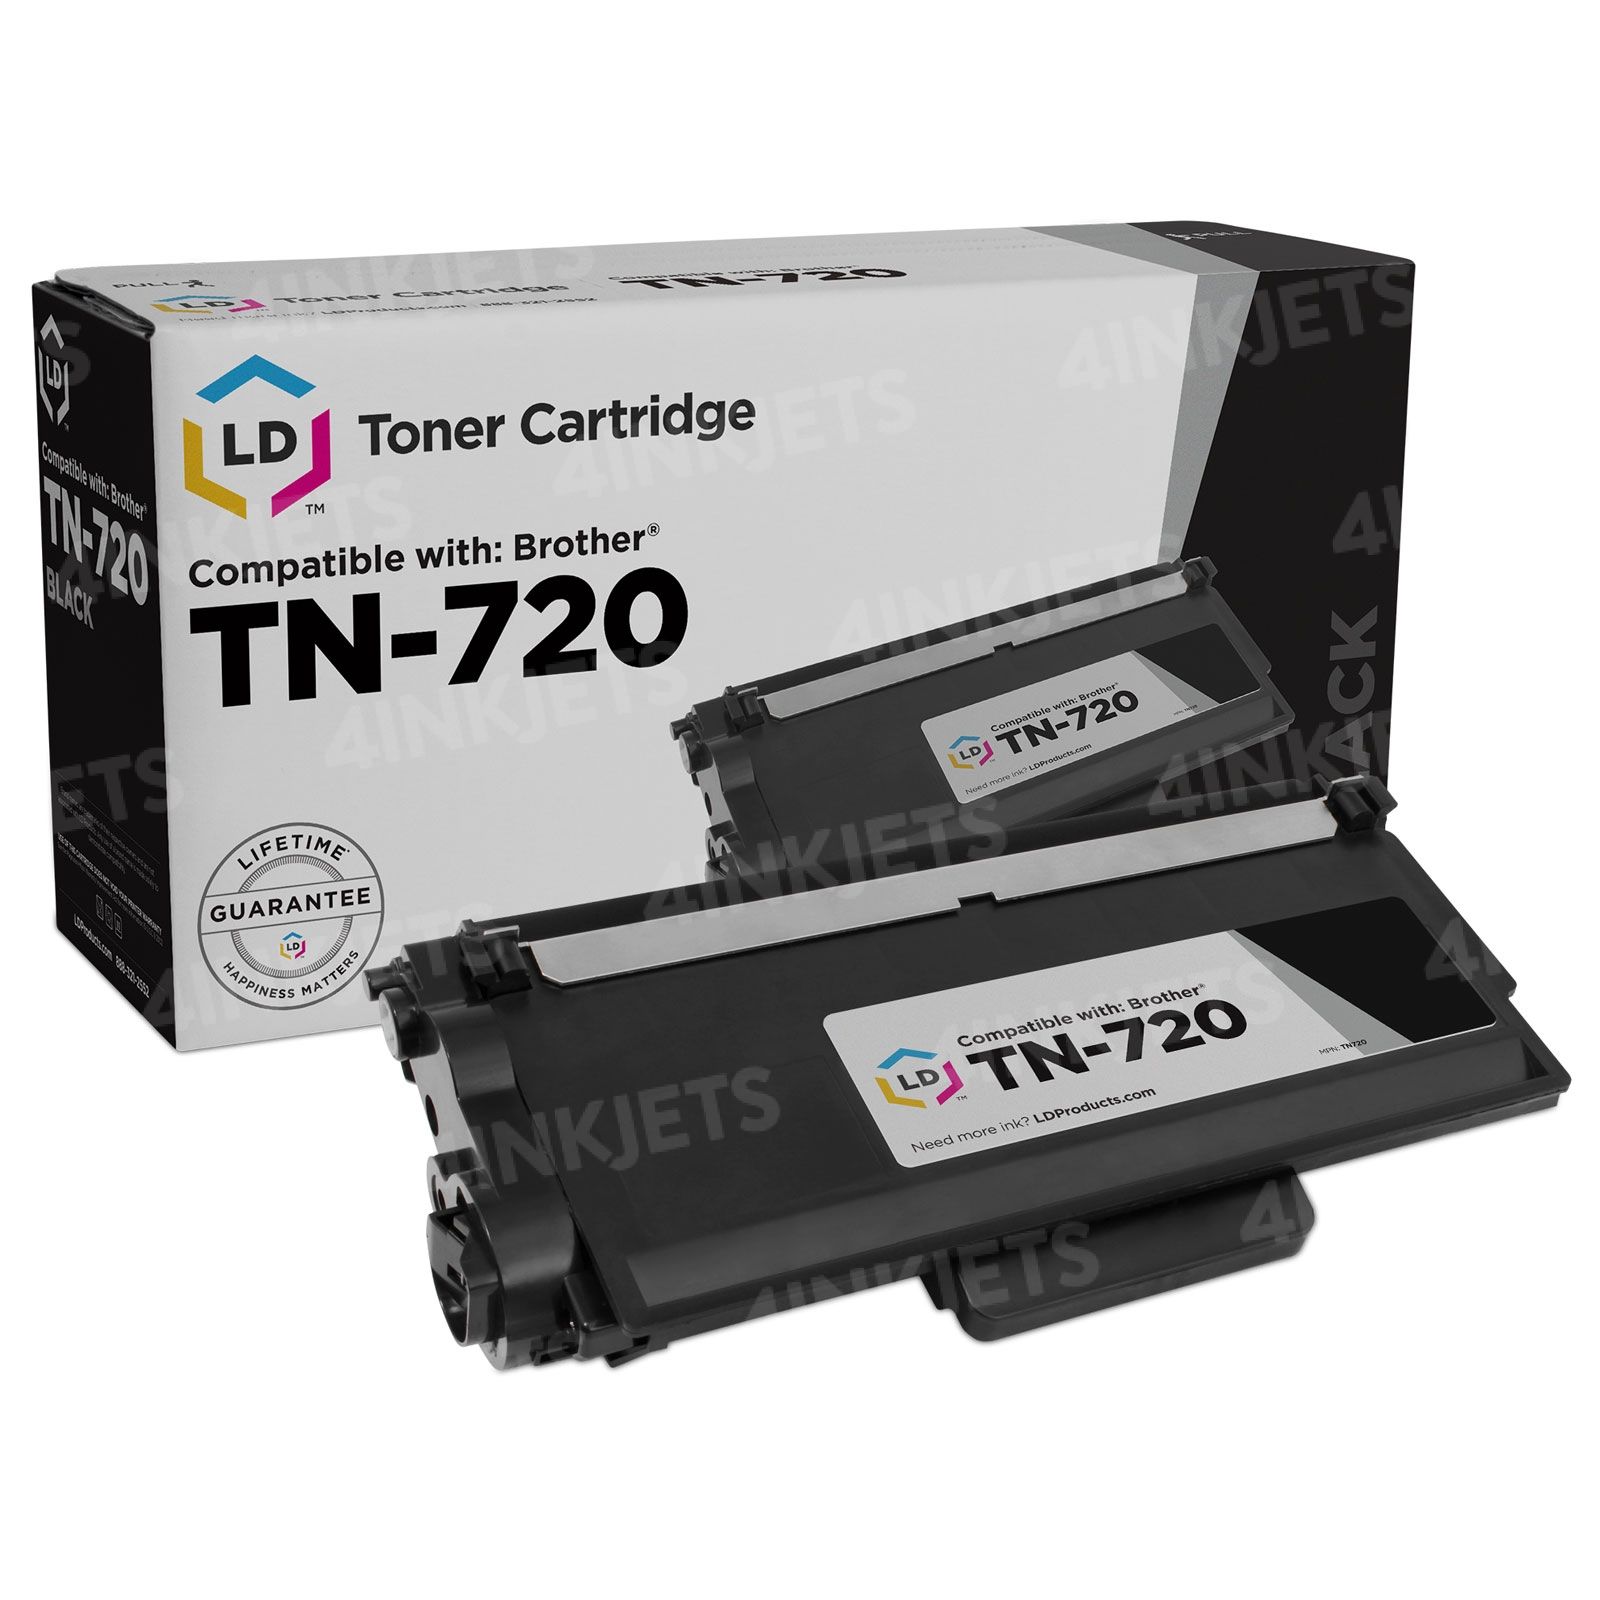 Compatible Brother TN423 Black Toner - Webcartridge